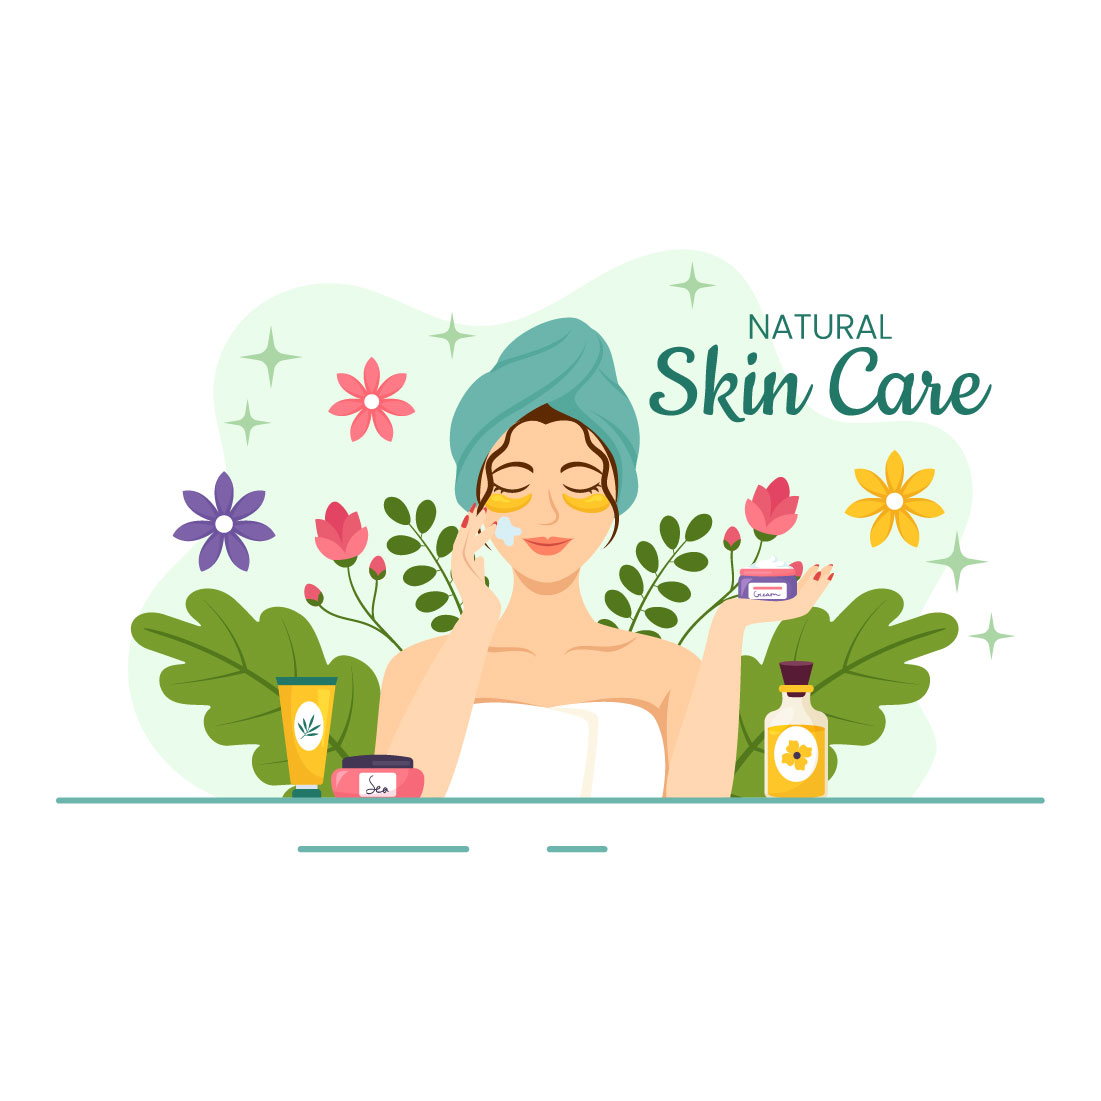 14 Natural Skin Care Vector Illustration cover image.